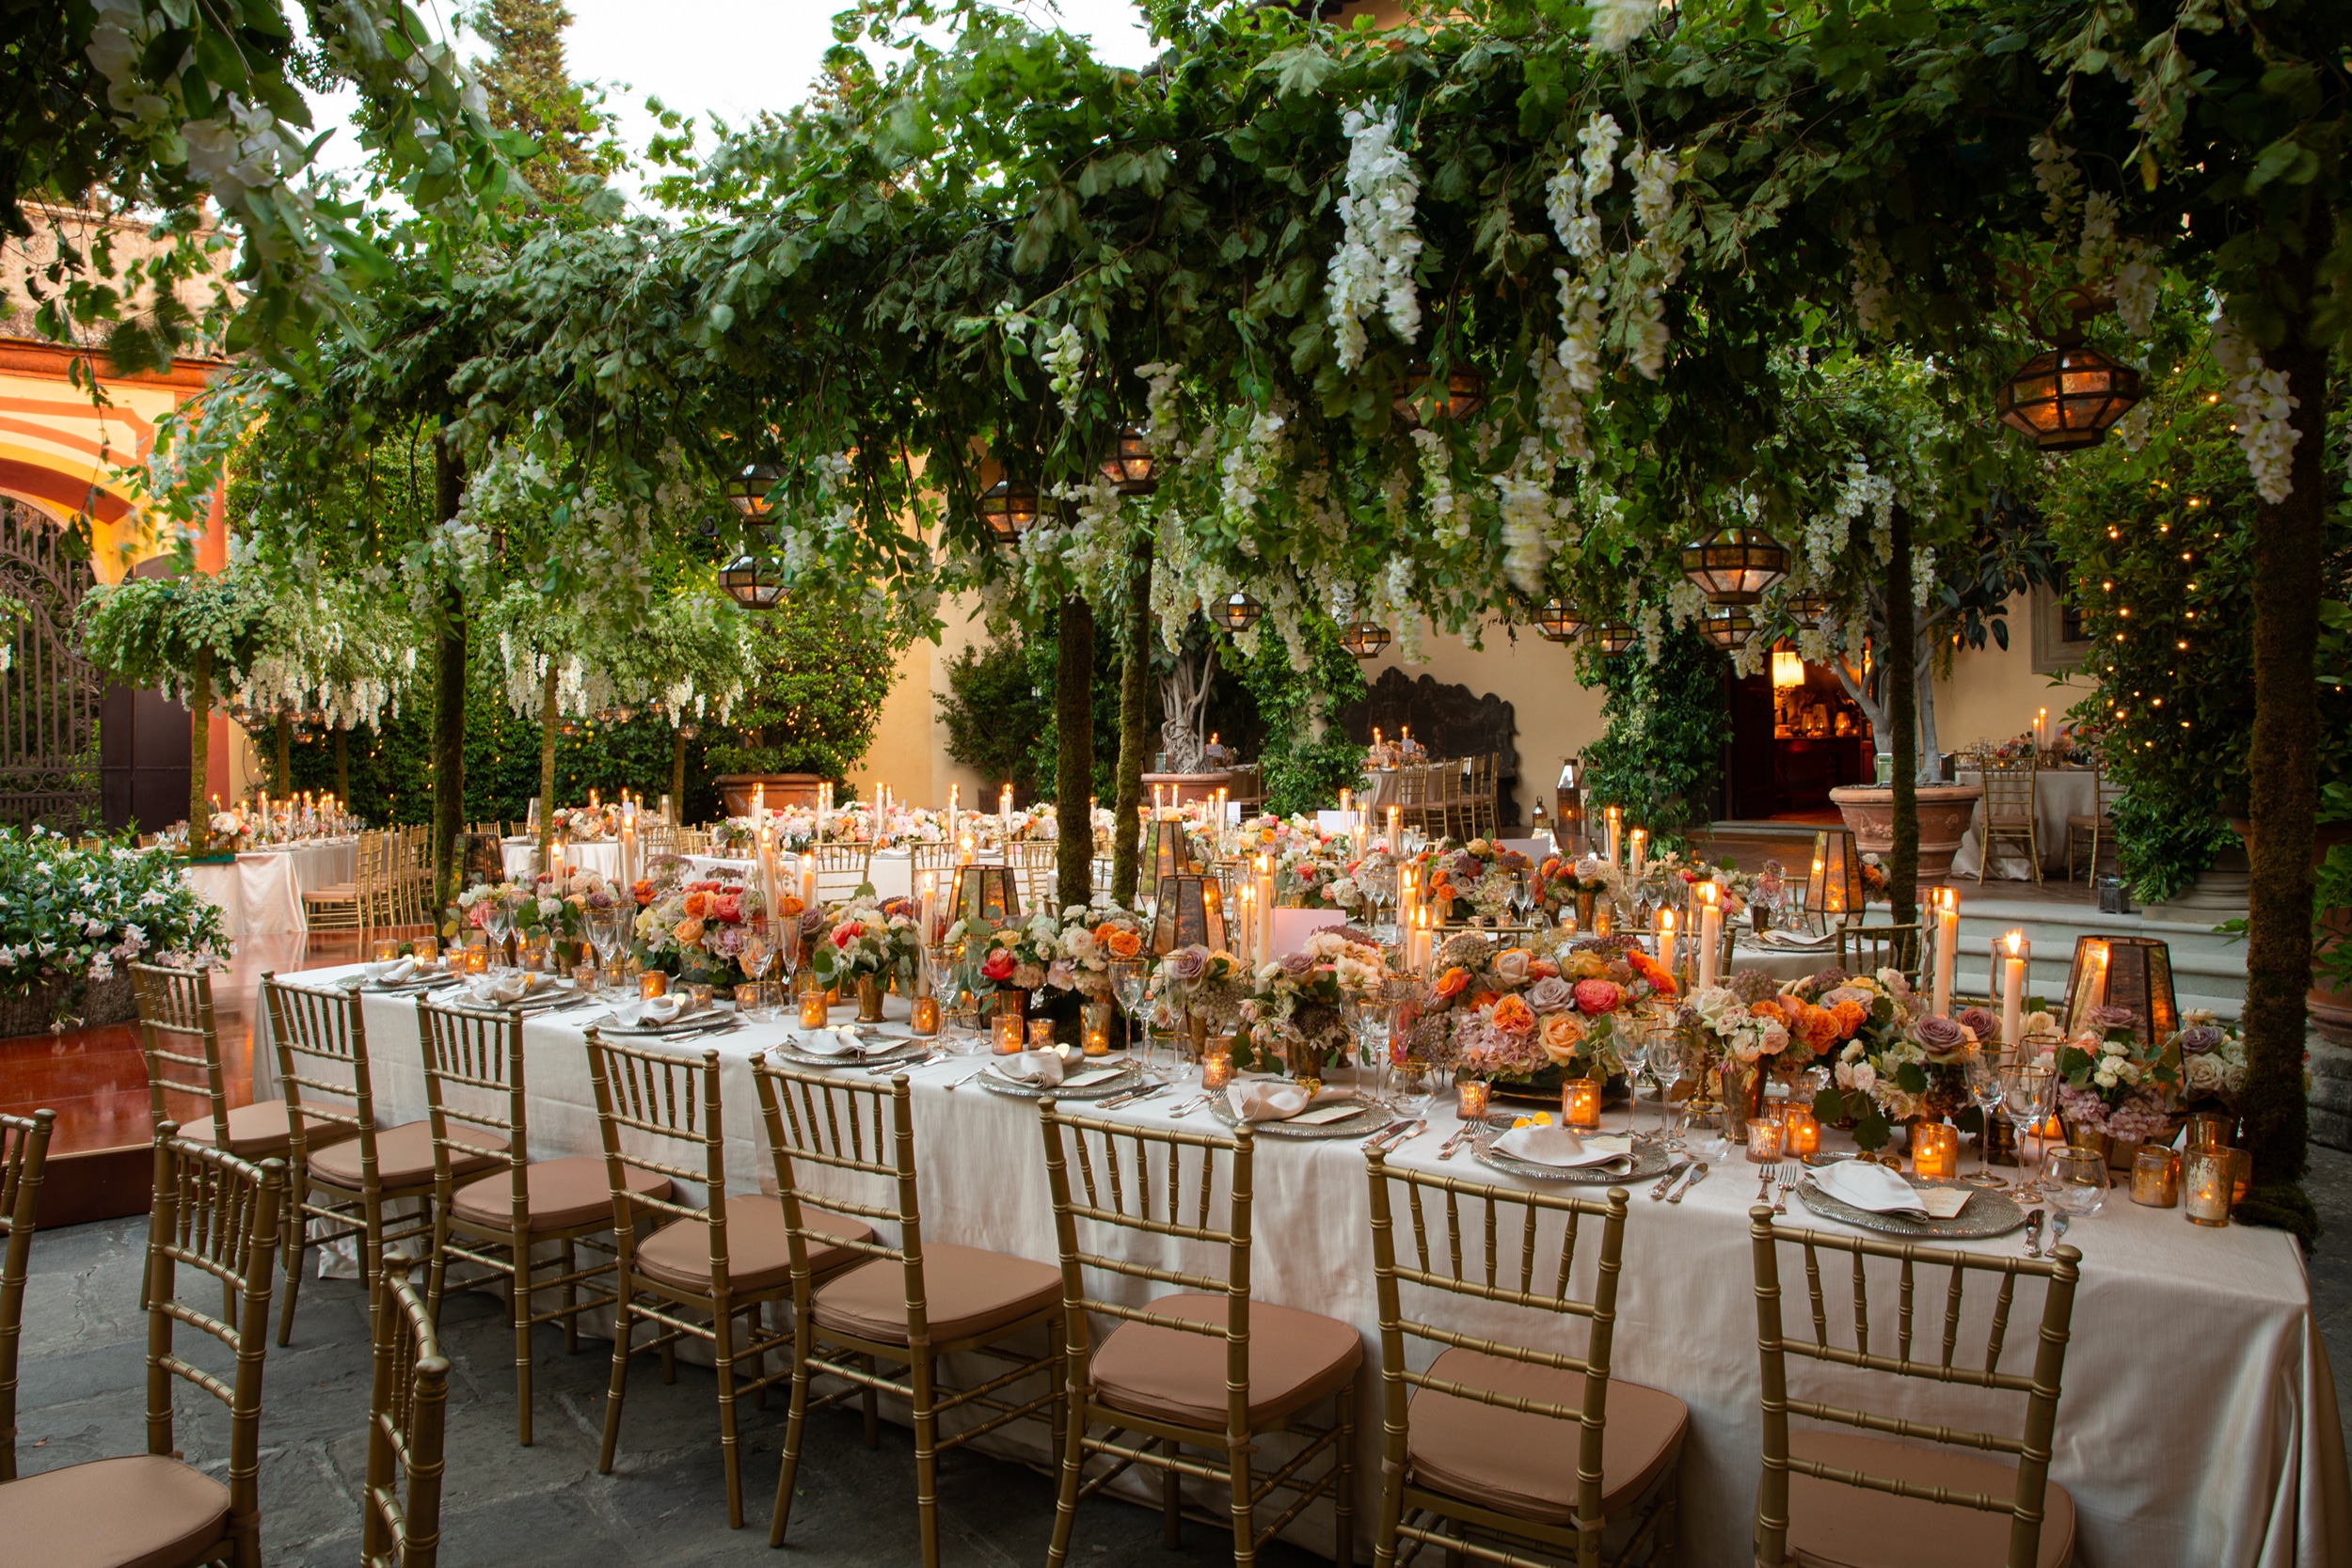 Luxury wedding in Italy: video of a secret garden